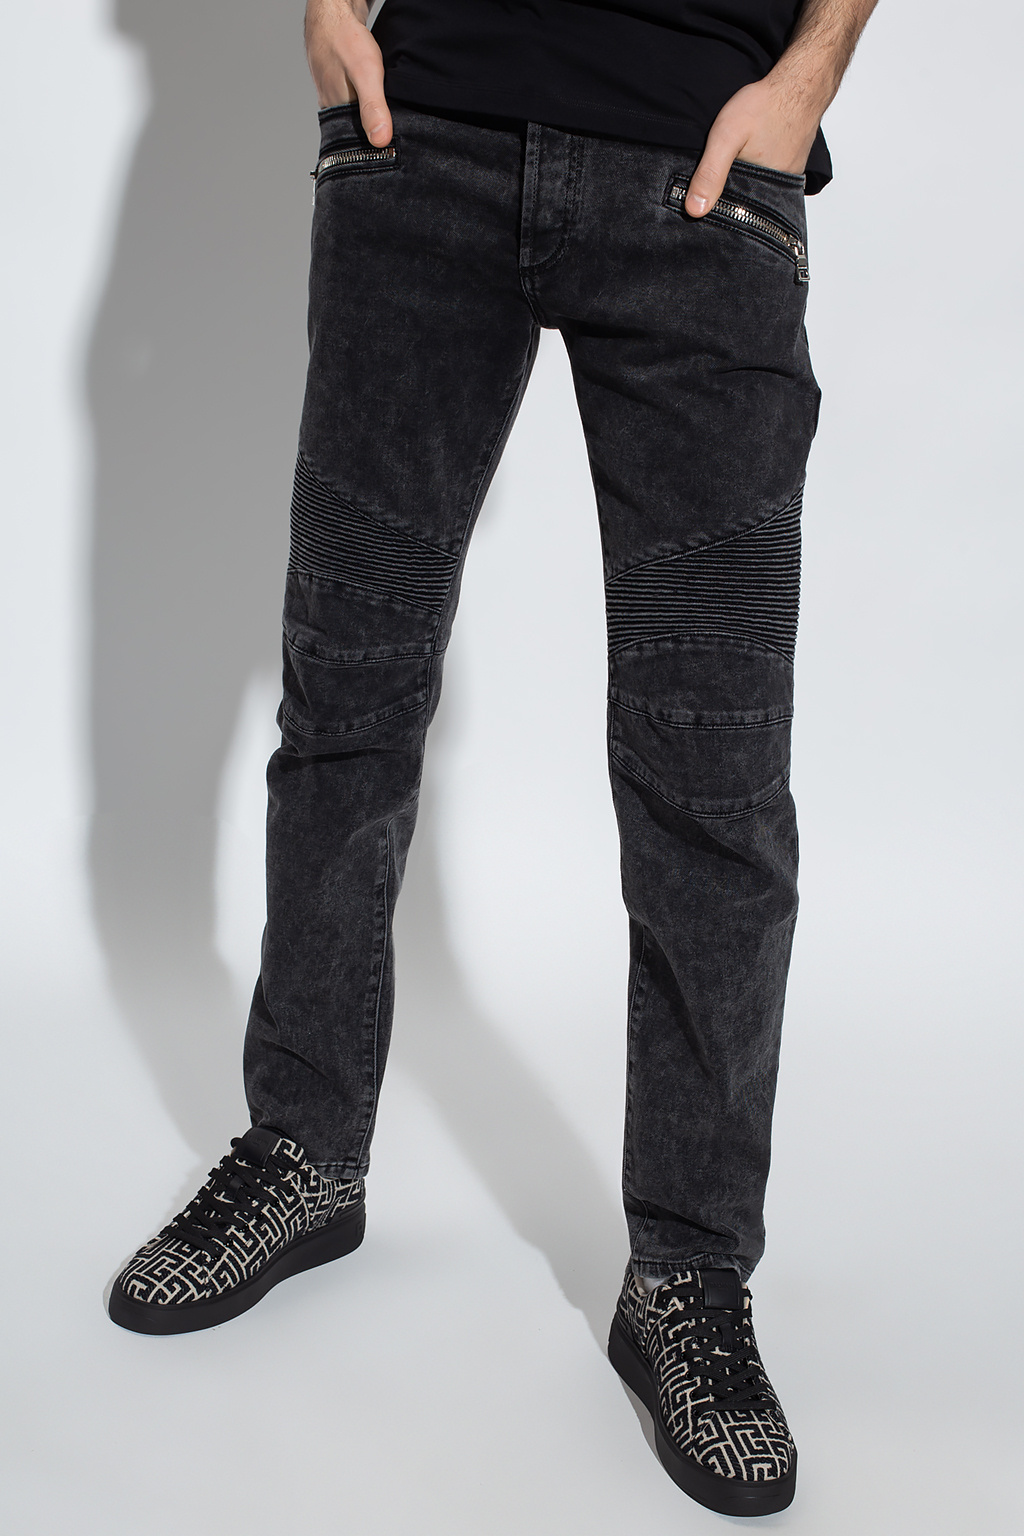 Balmain Jeans with logo | Men's Clothing |